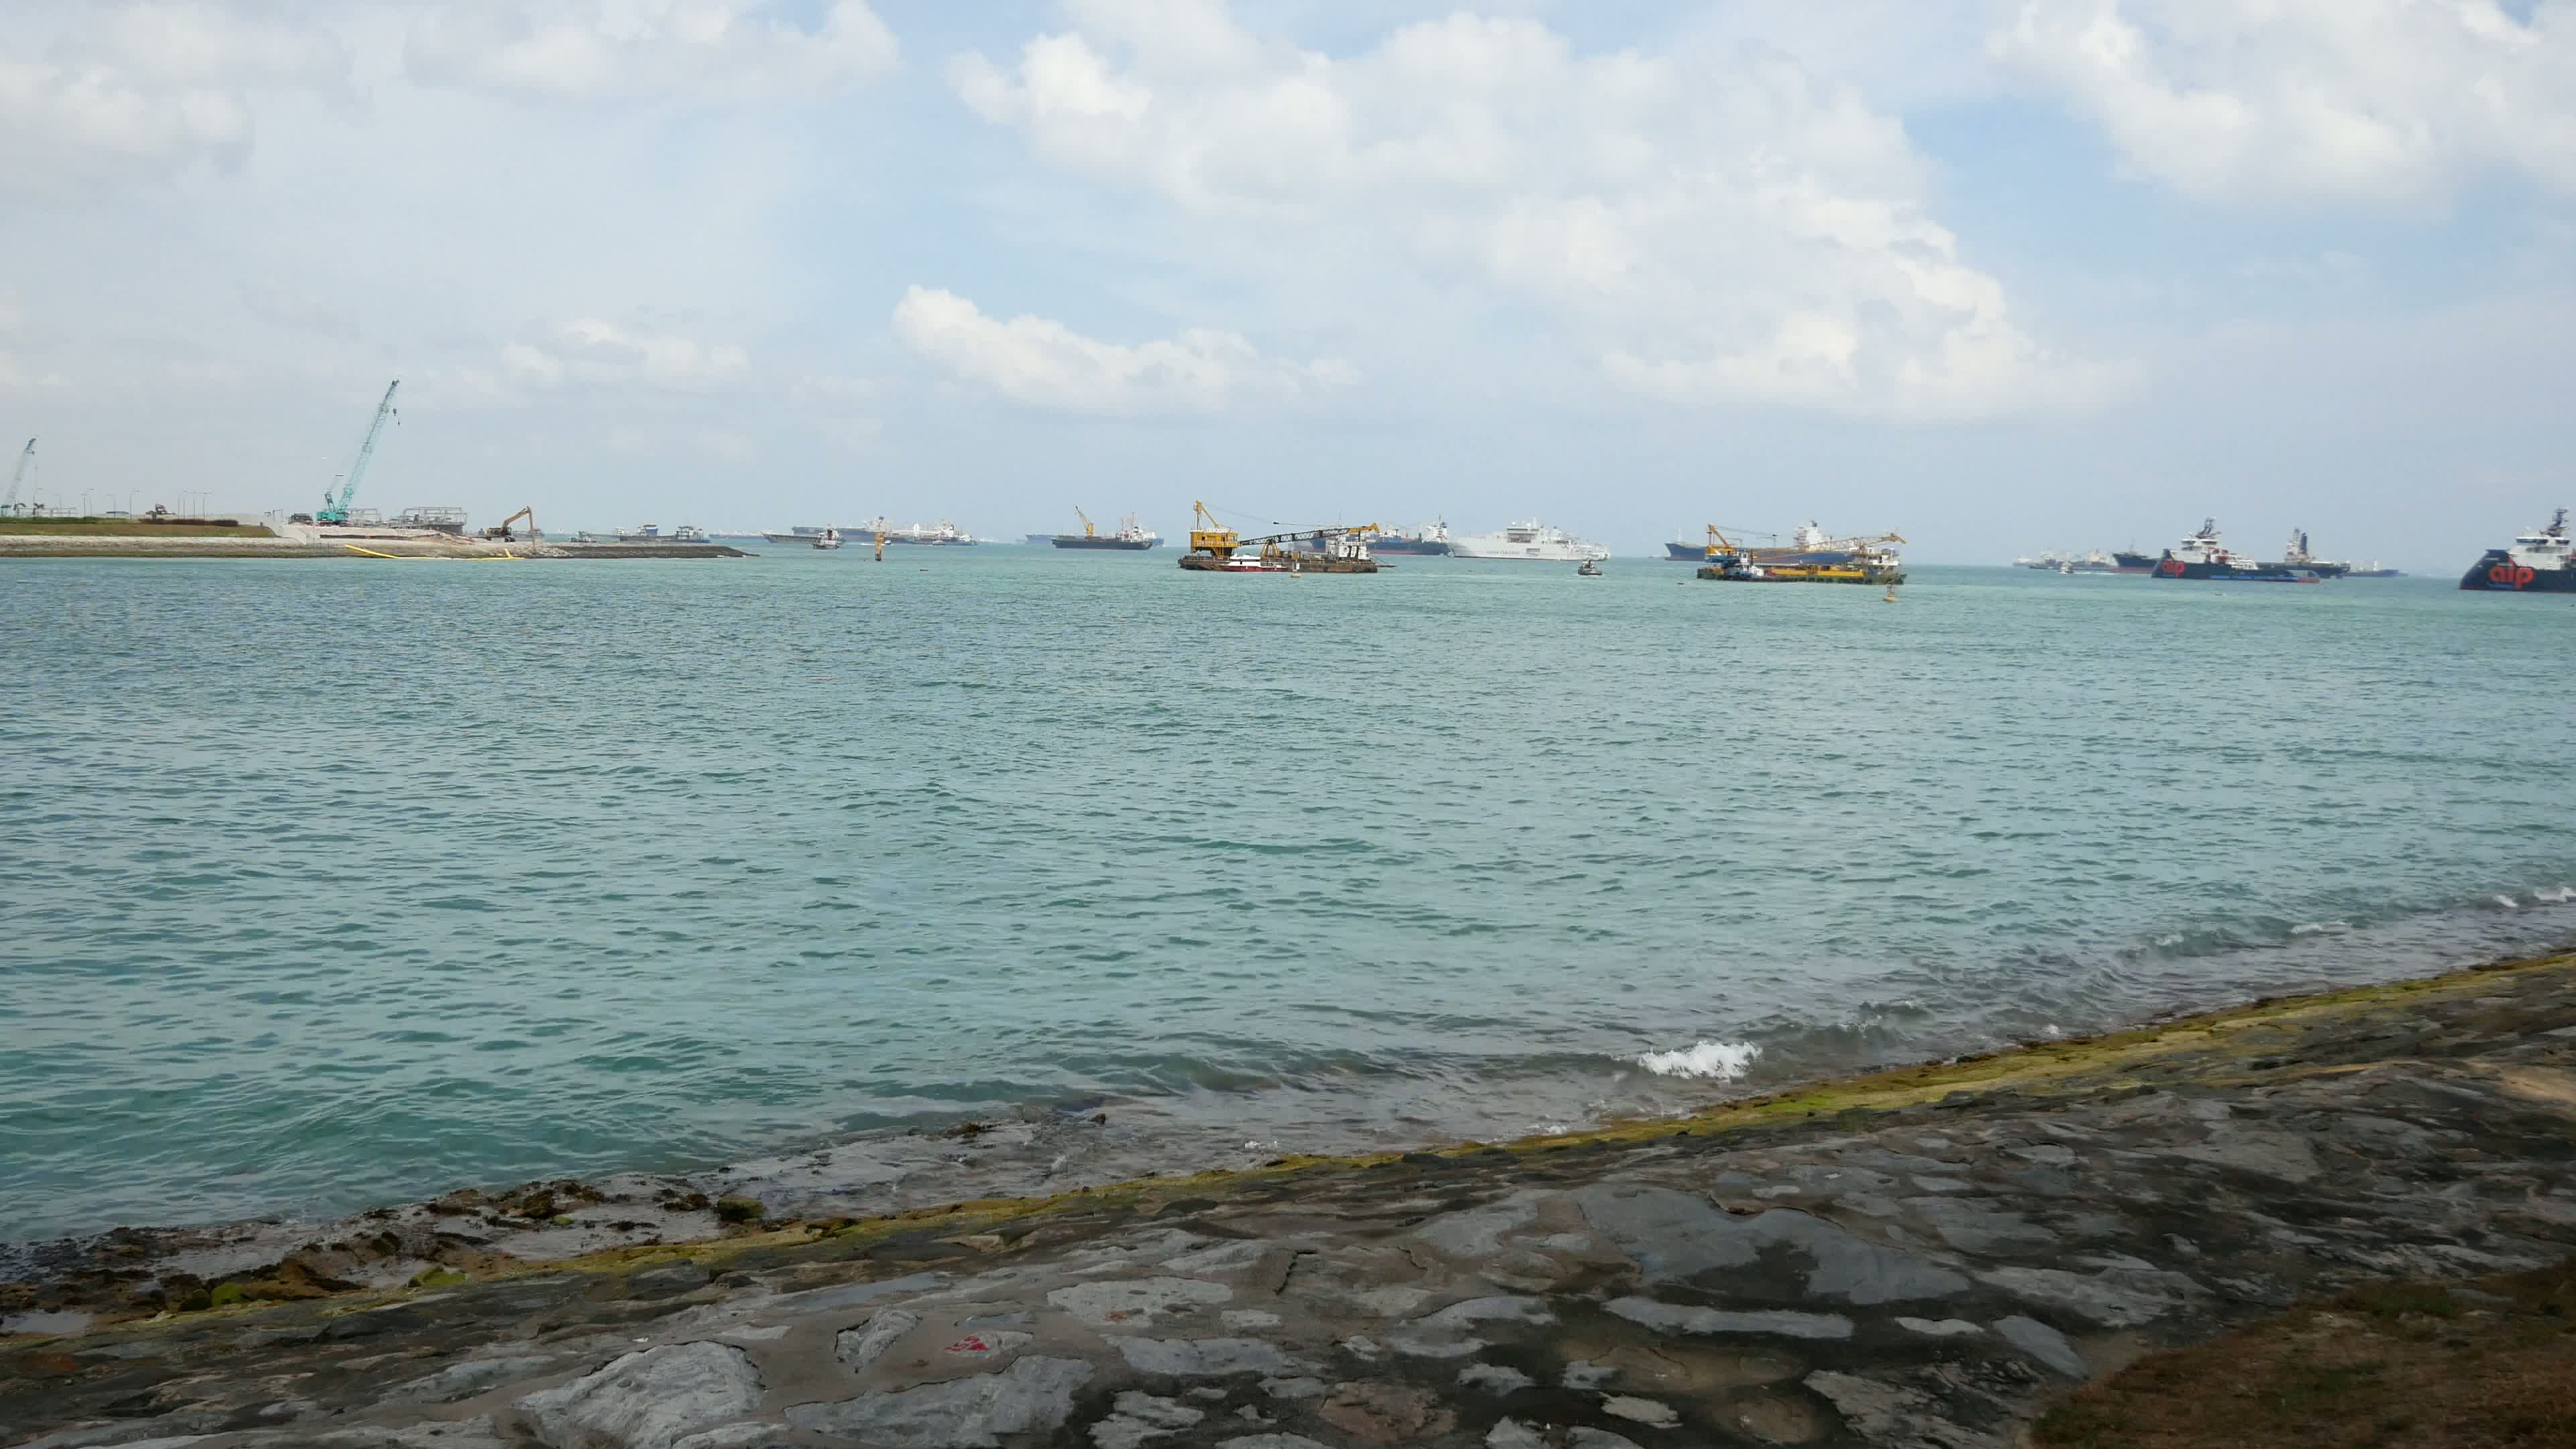 Marina Barrage Video 15